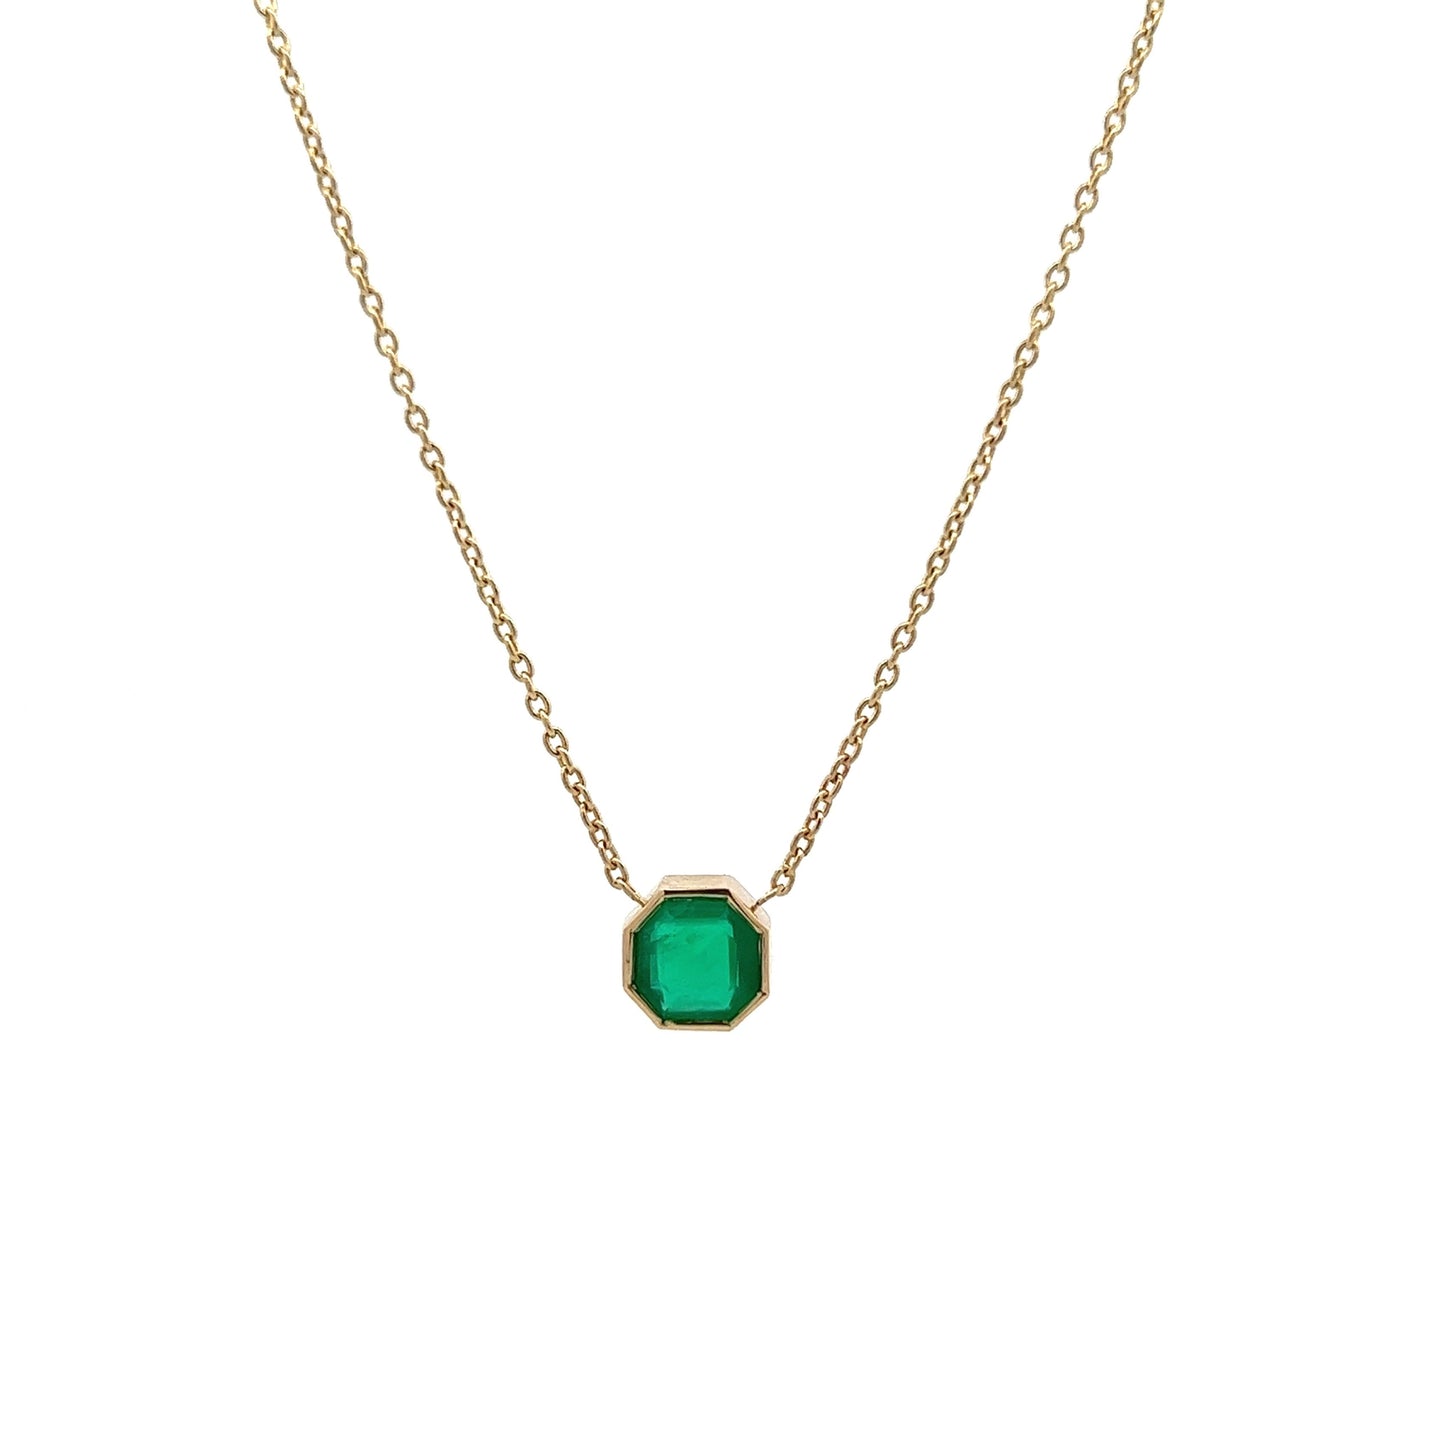 1.19 Octagonal Cut Emerald Pendant in 14k Yellow Gold